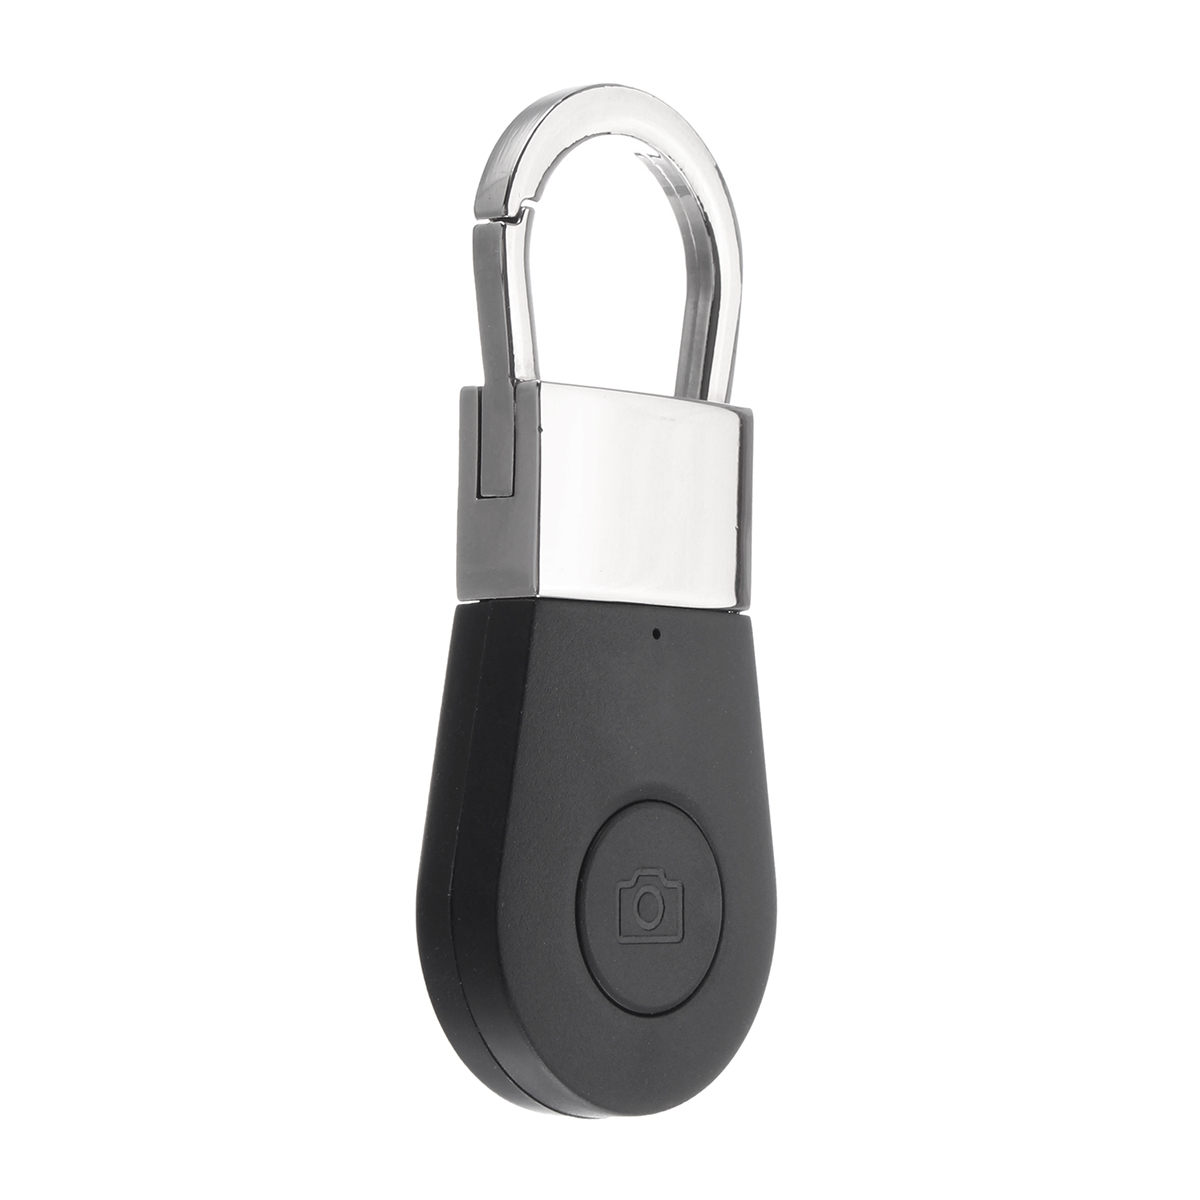 Bluetooth Keychain Tracker Finder Locator Anti Lost GPS Alarm Child Pet Tracking